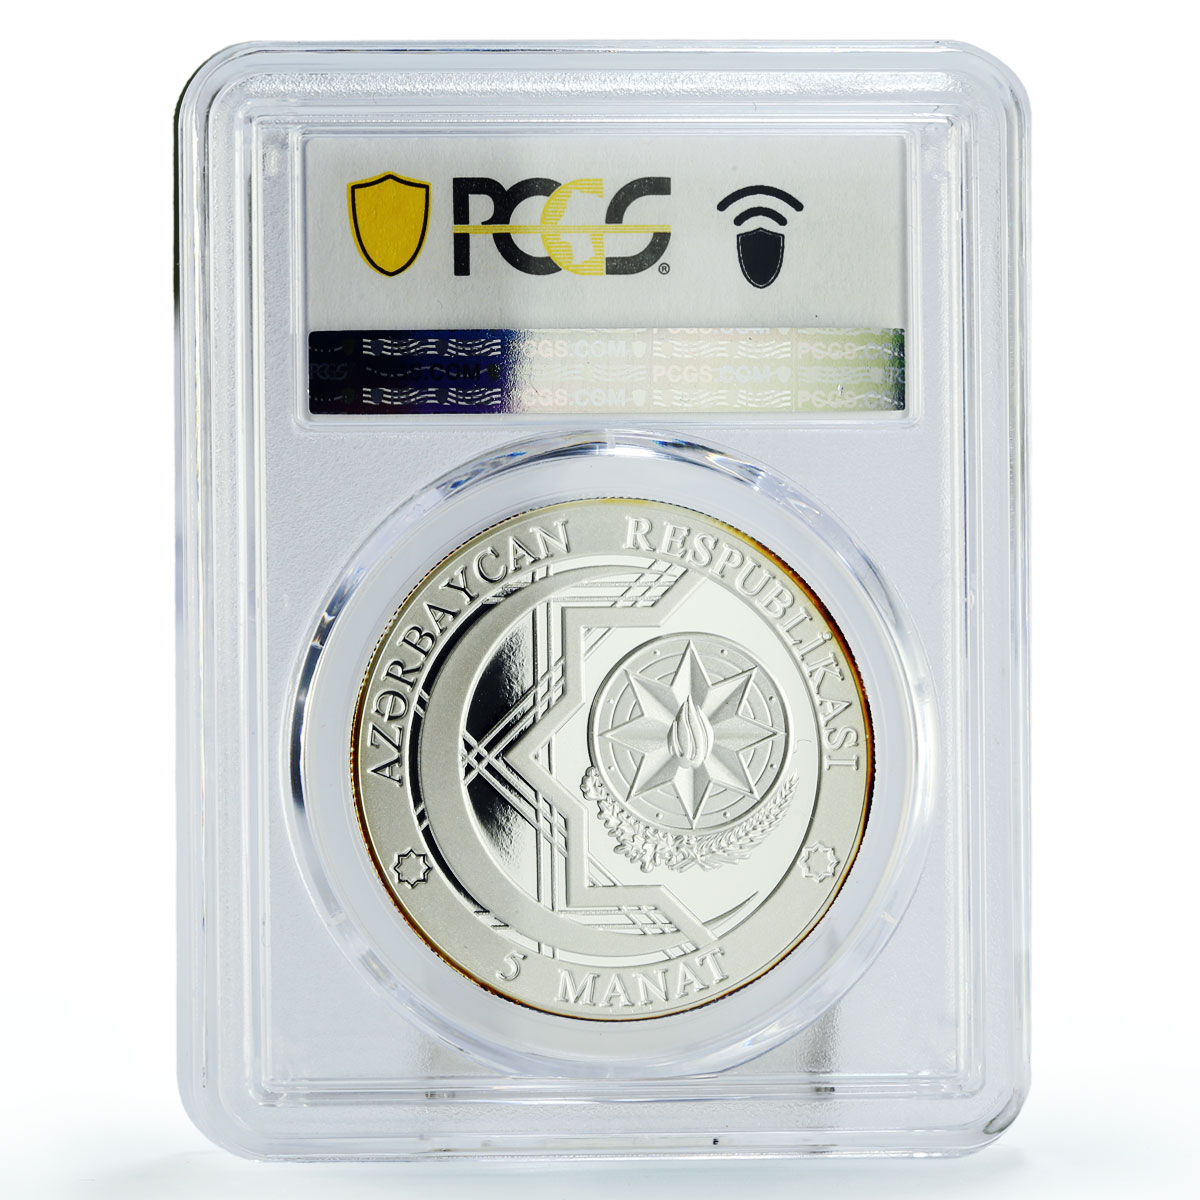 Azerbaijan 5 manat Heydar Aliev Century Contract PR69 PCGS silver coin 2014